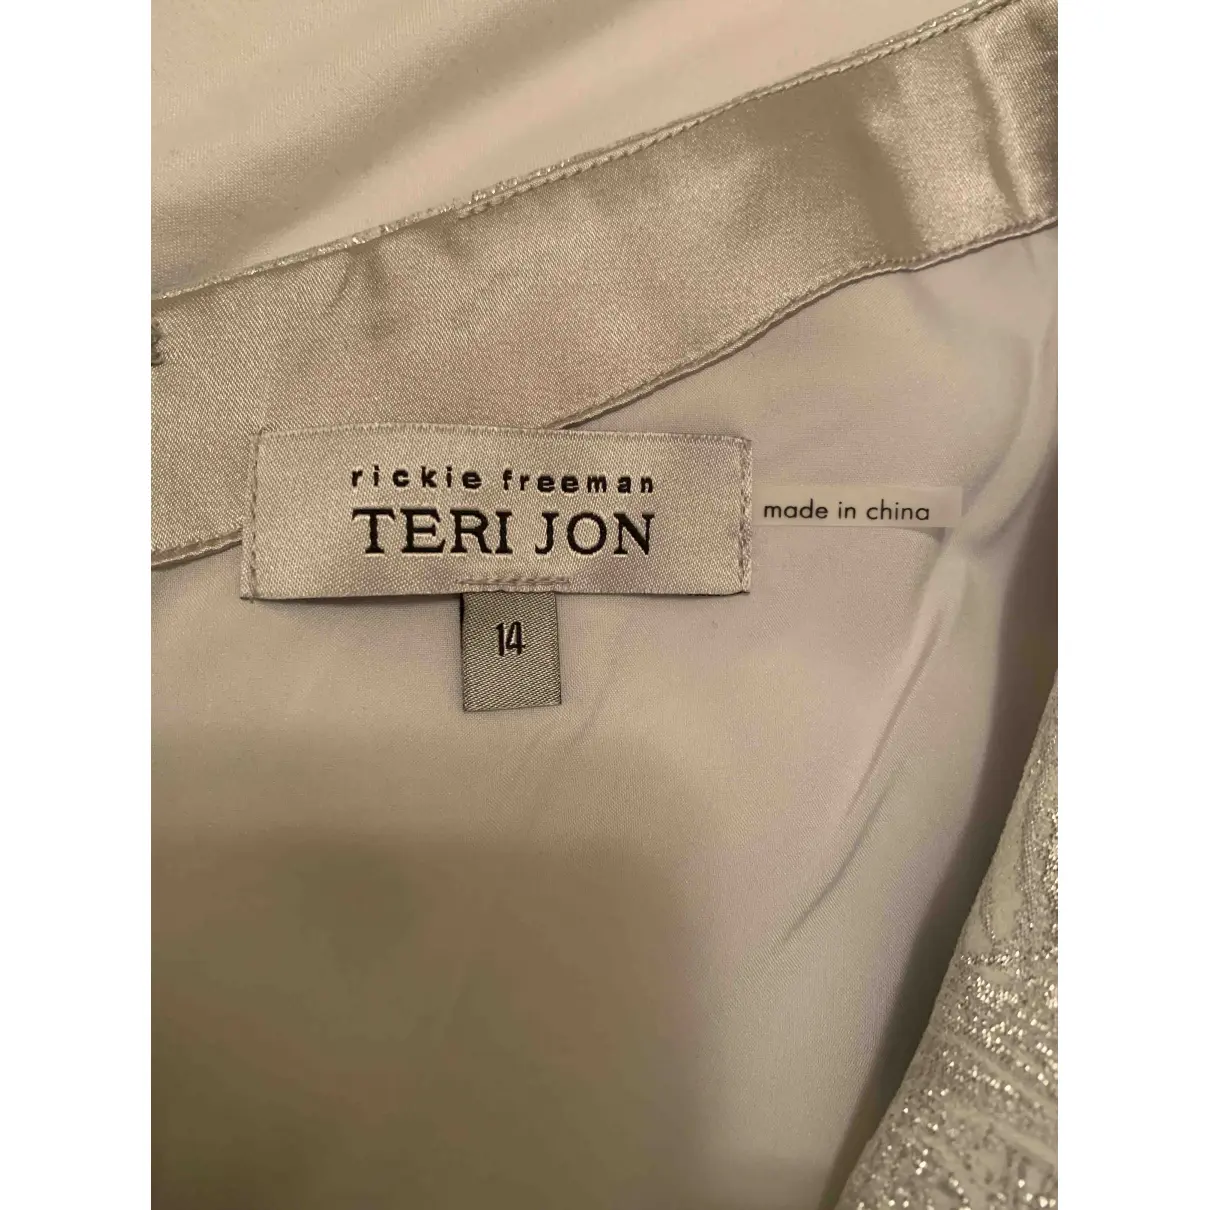 Buy Teri Jon Maxi dress online